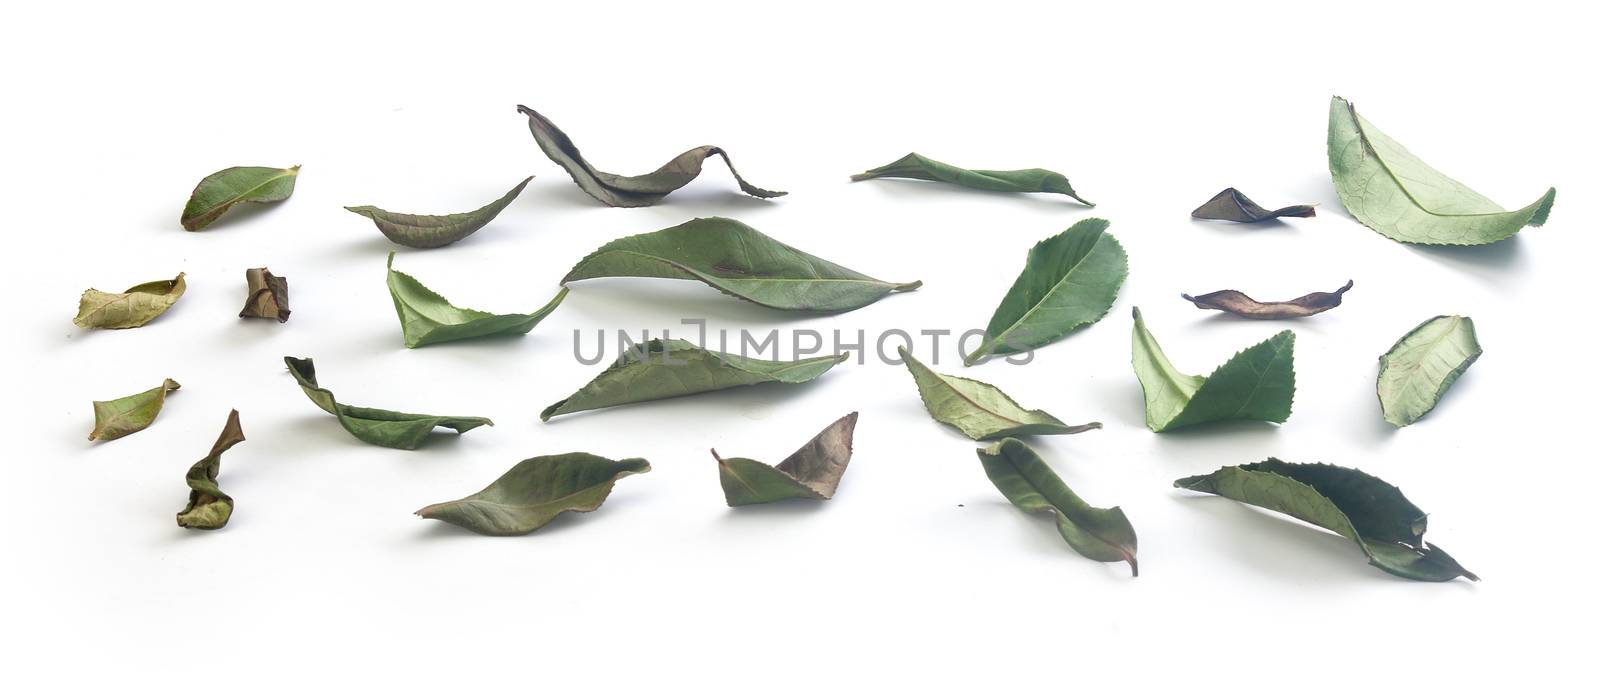 Tea leaves by Angorius